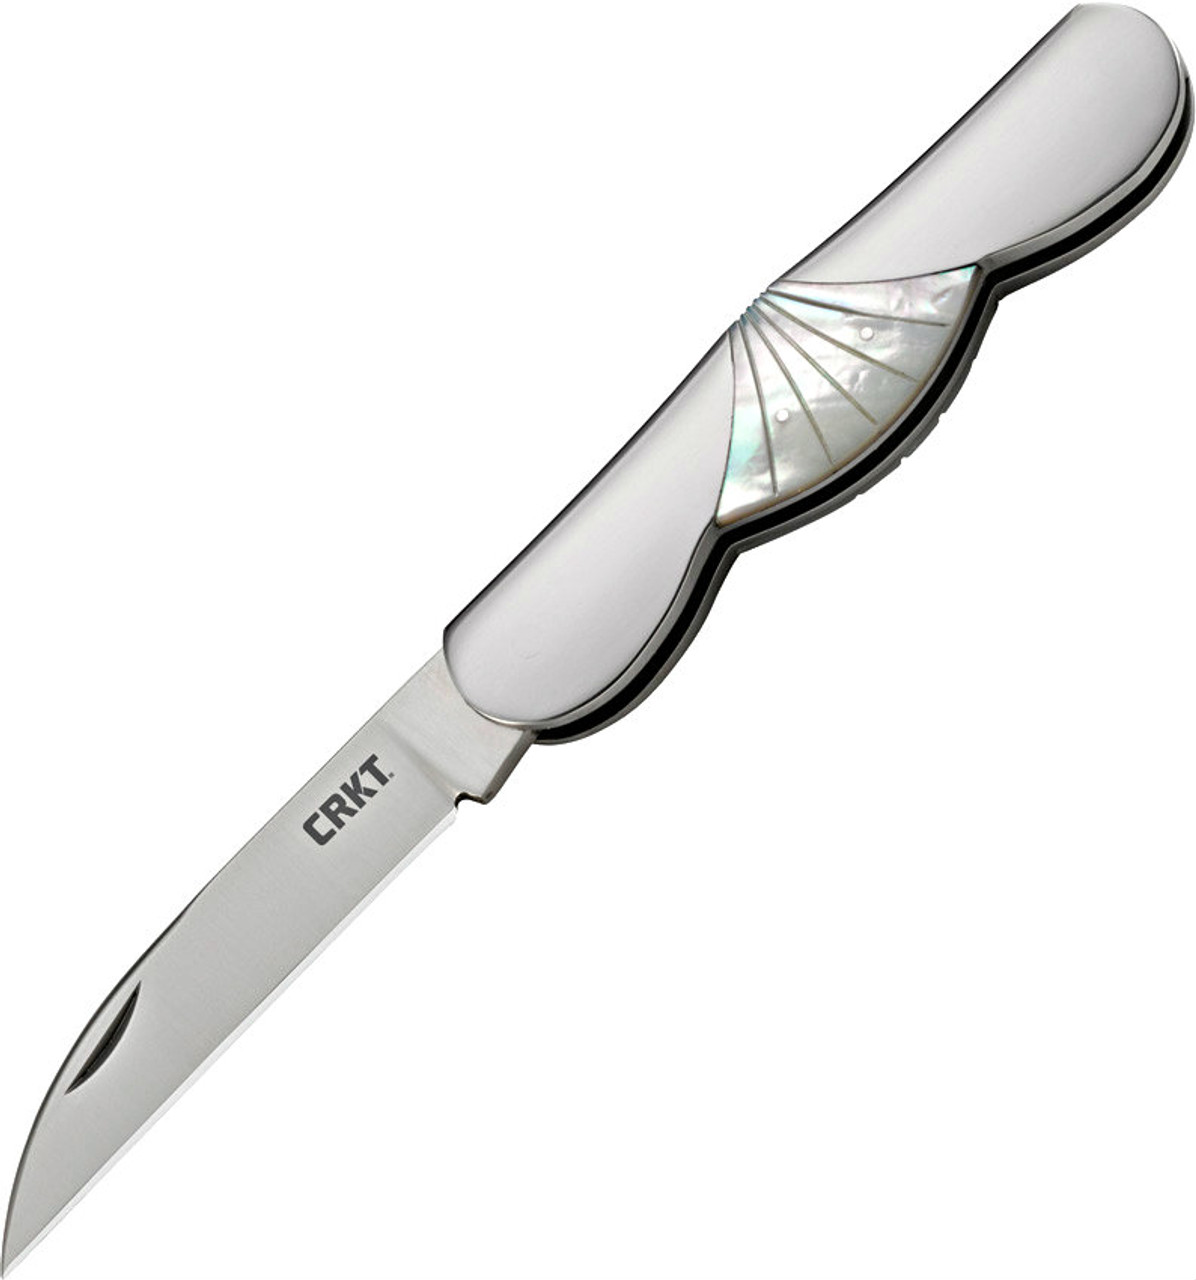 CRKT Daedalus Slip Joint Knife Steigerwalt Design